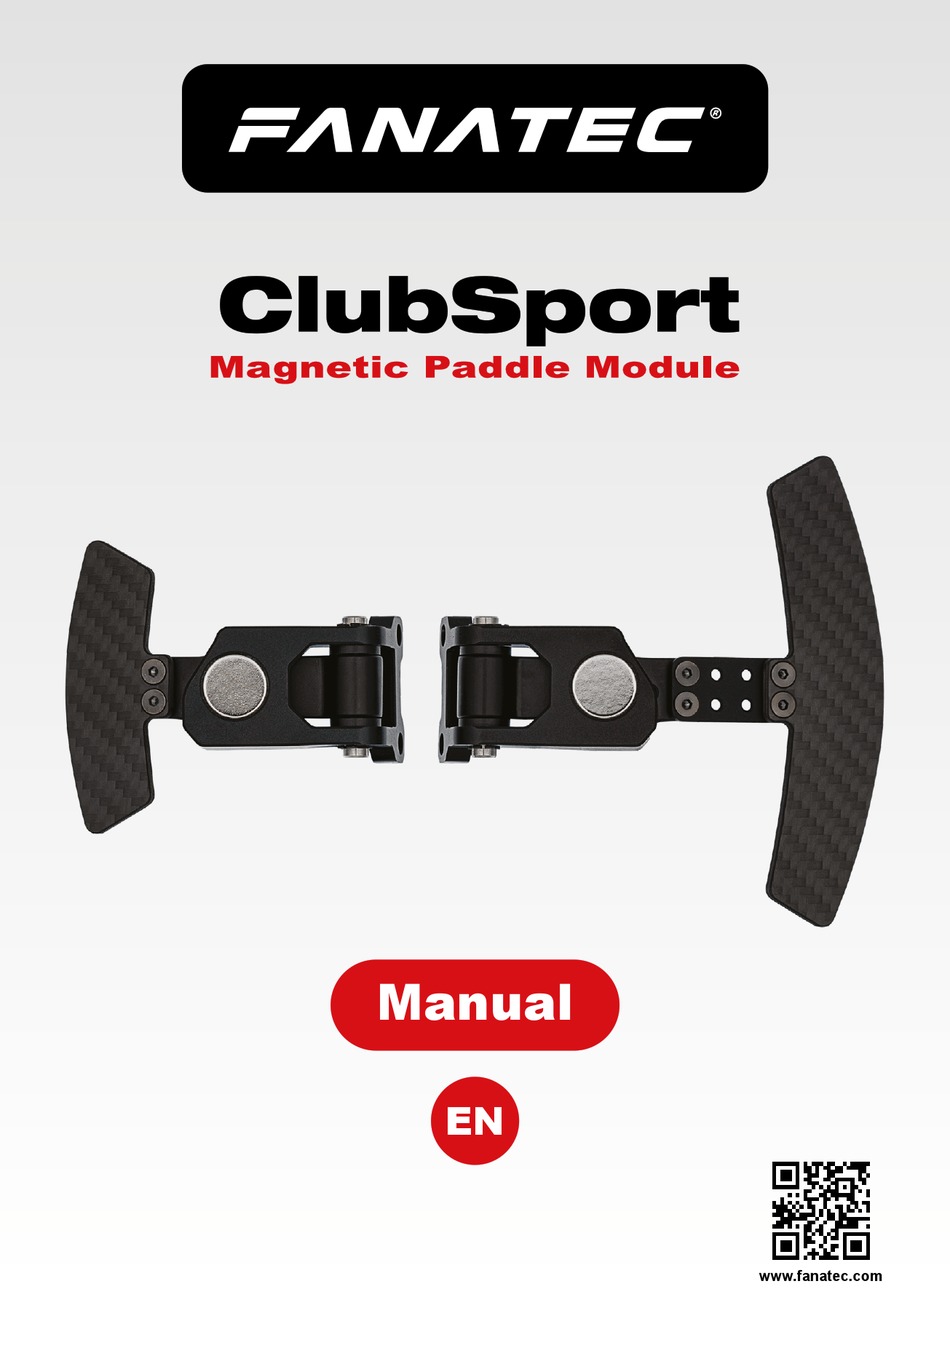 ENDOR FANATEC CLUBSPORT MAGNETIC PADDLE MODULE MANUAL Pdf Download